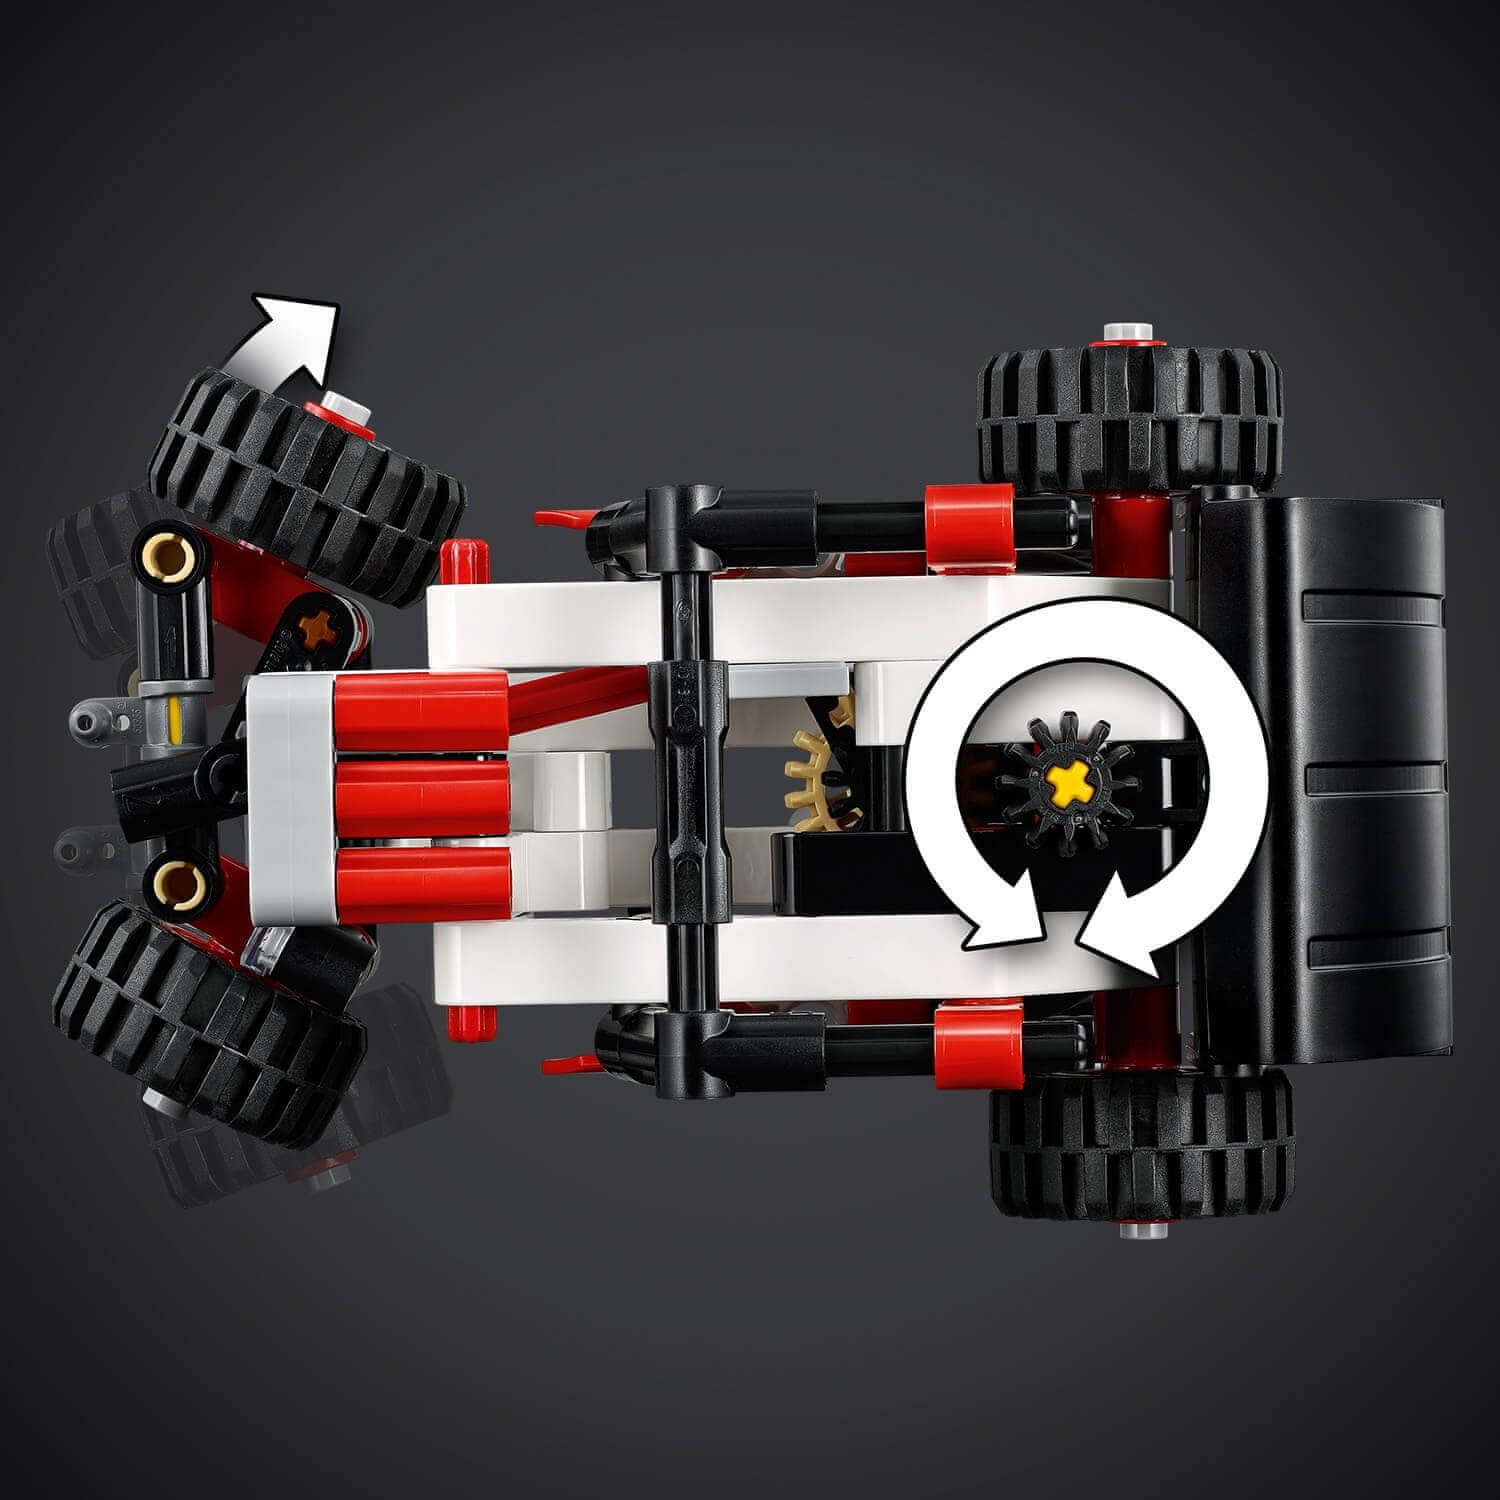 LEGO Technic 42116 Smykový nakladač